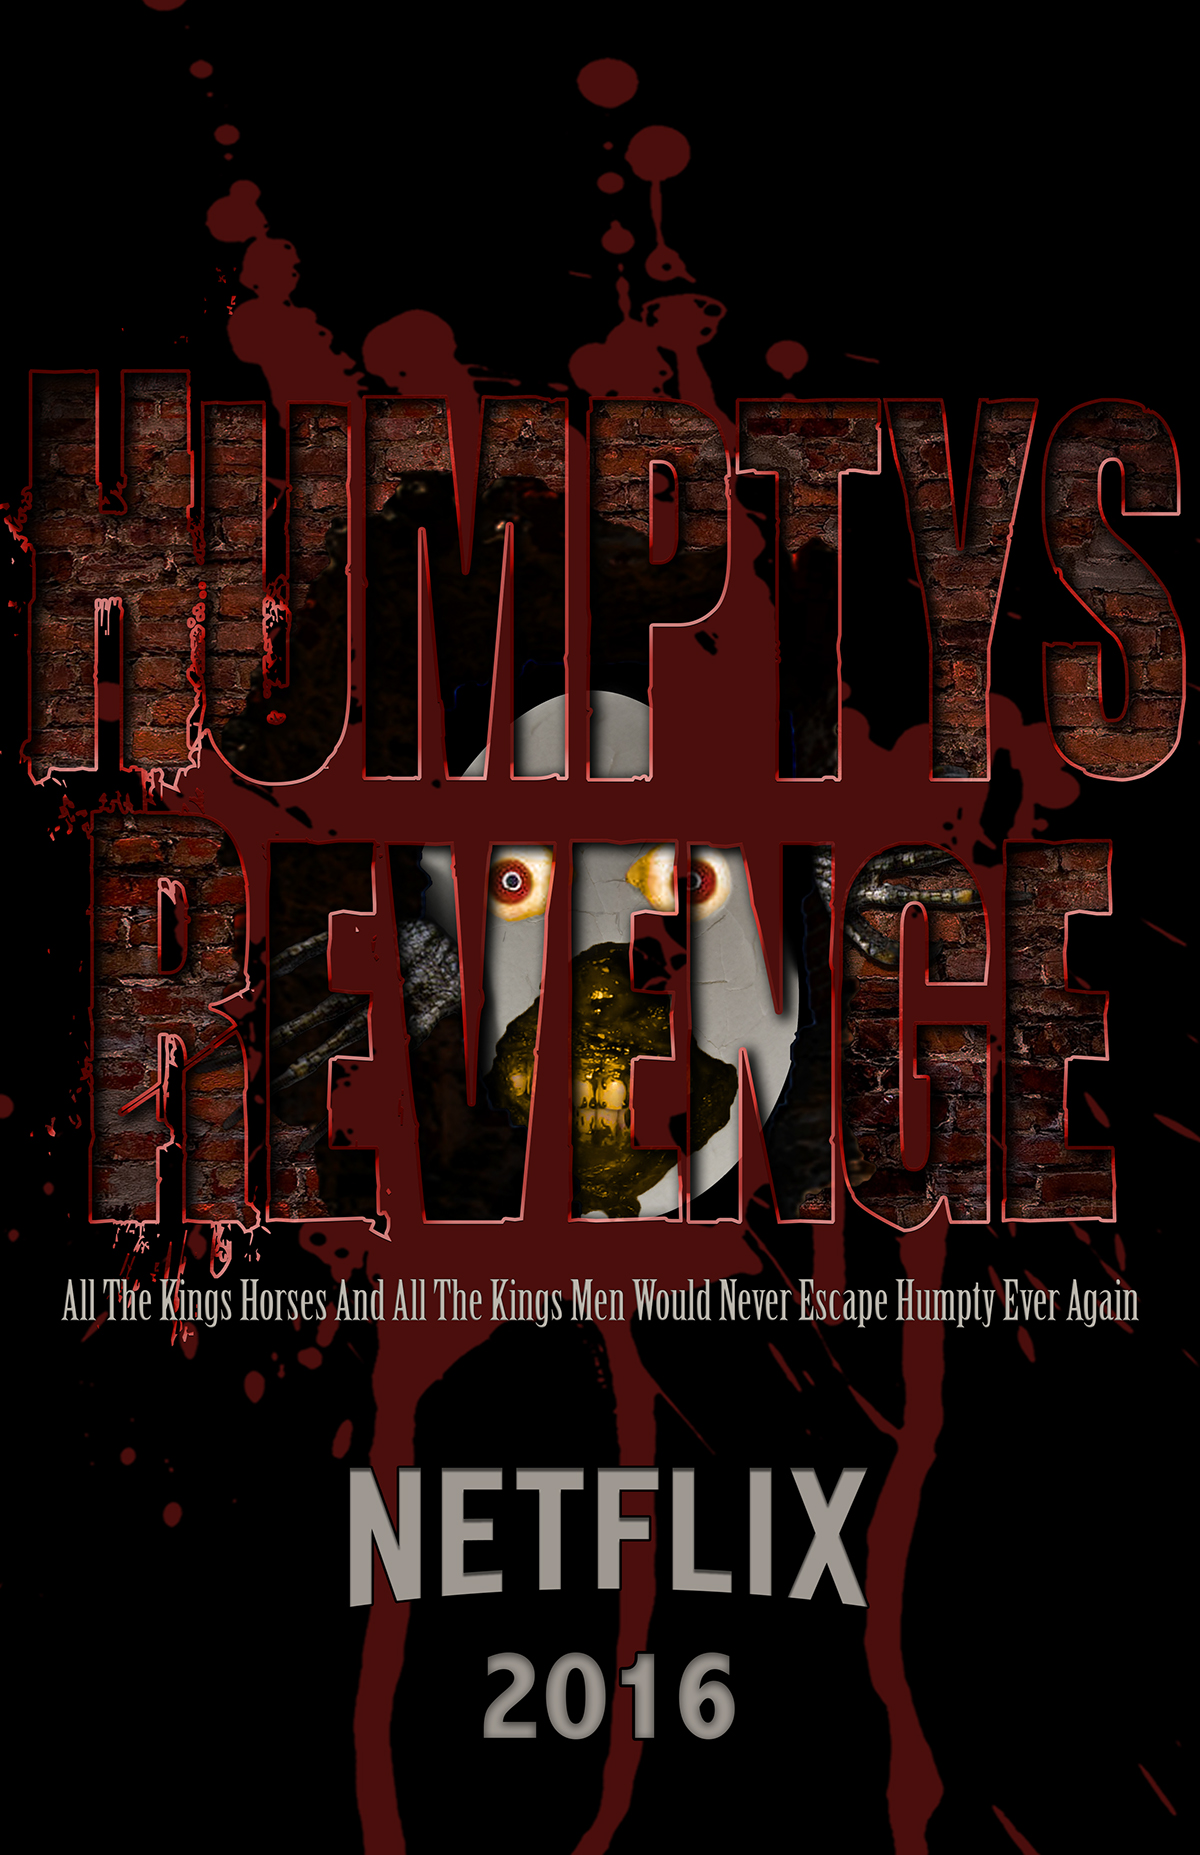 humpty dumpty nursery rhyme childhood horror Scary poster movie